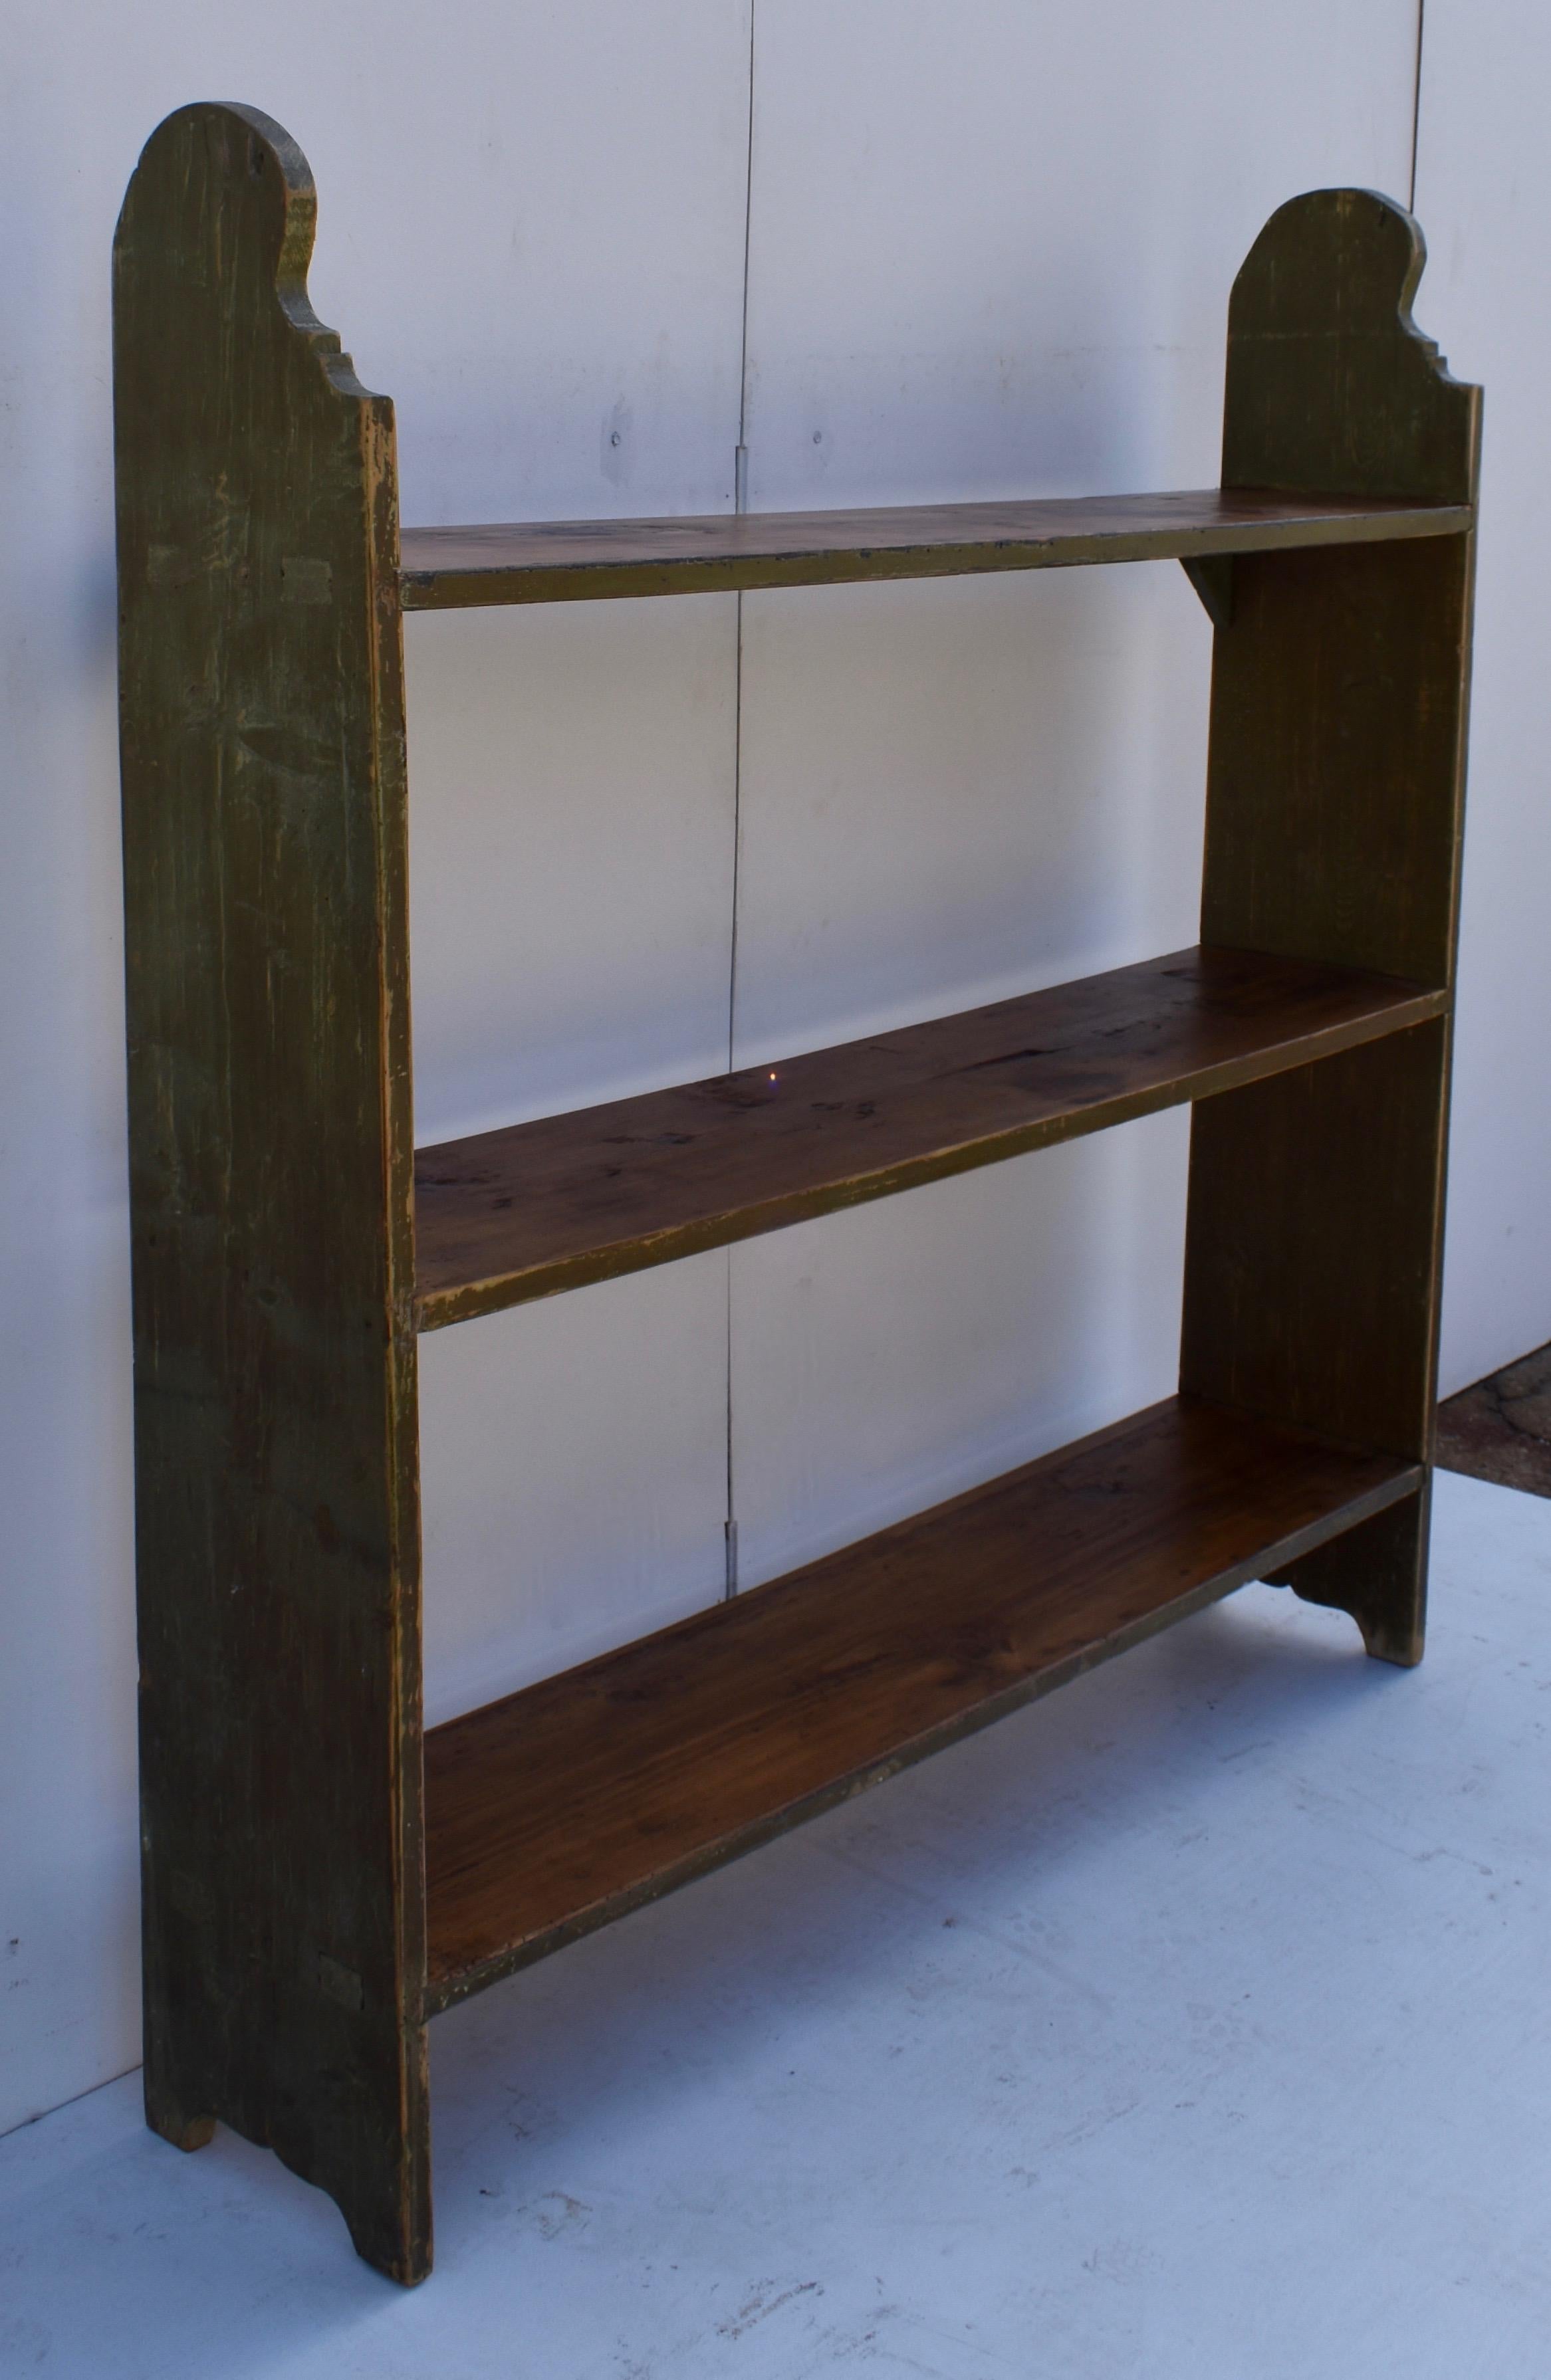 wooden utility shelf